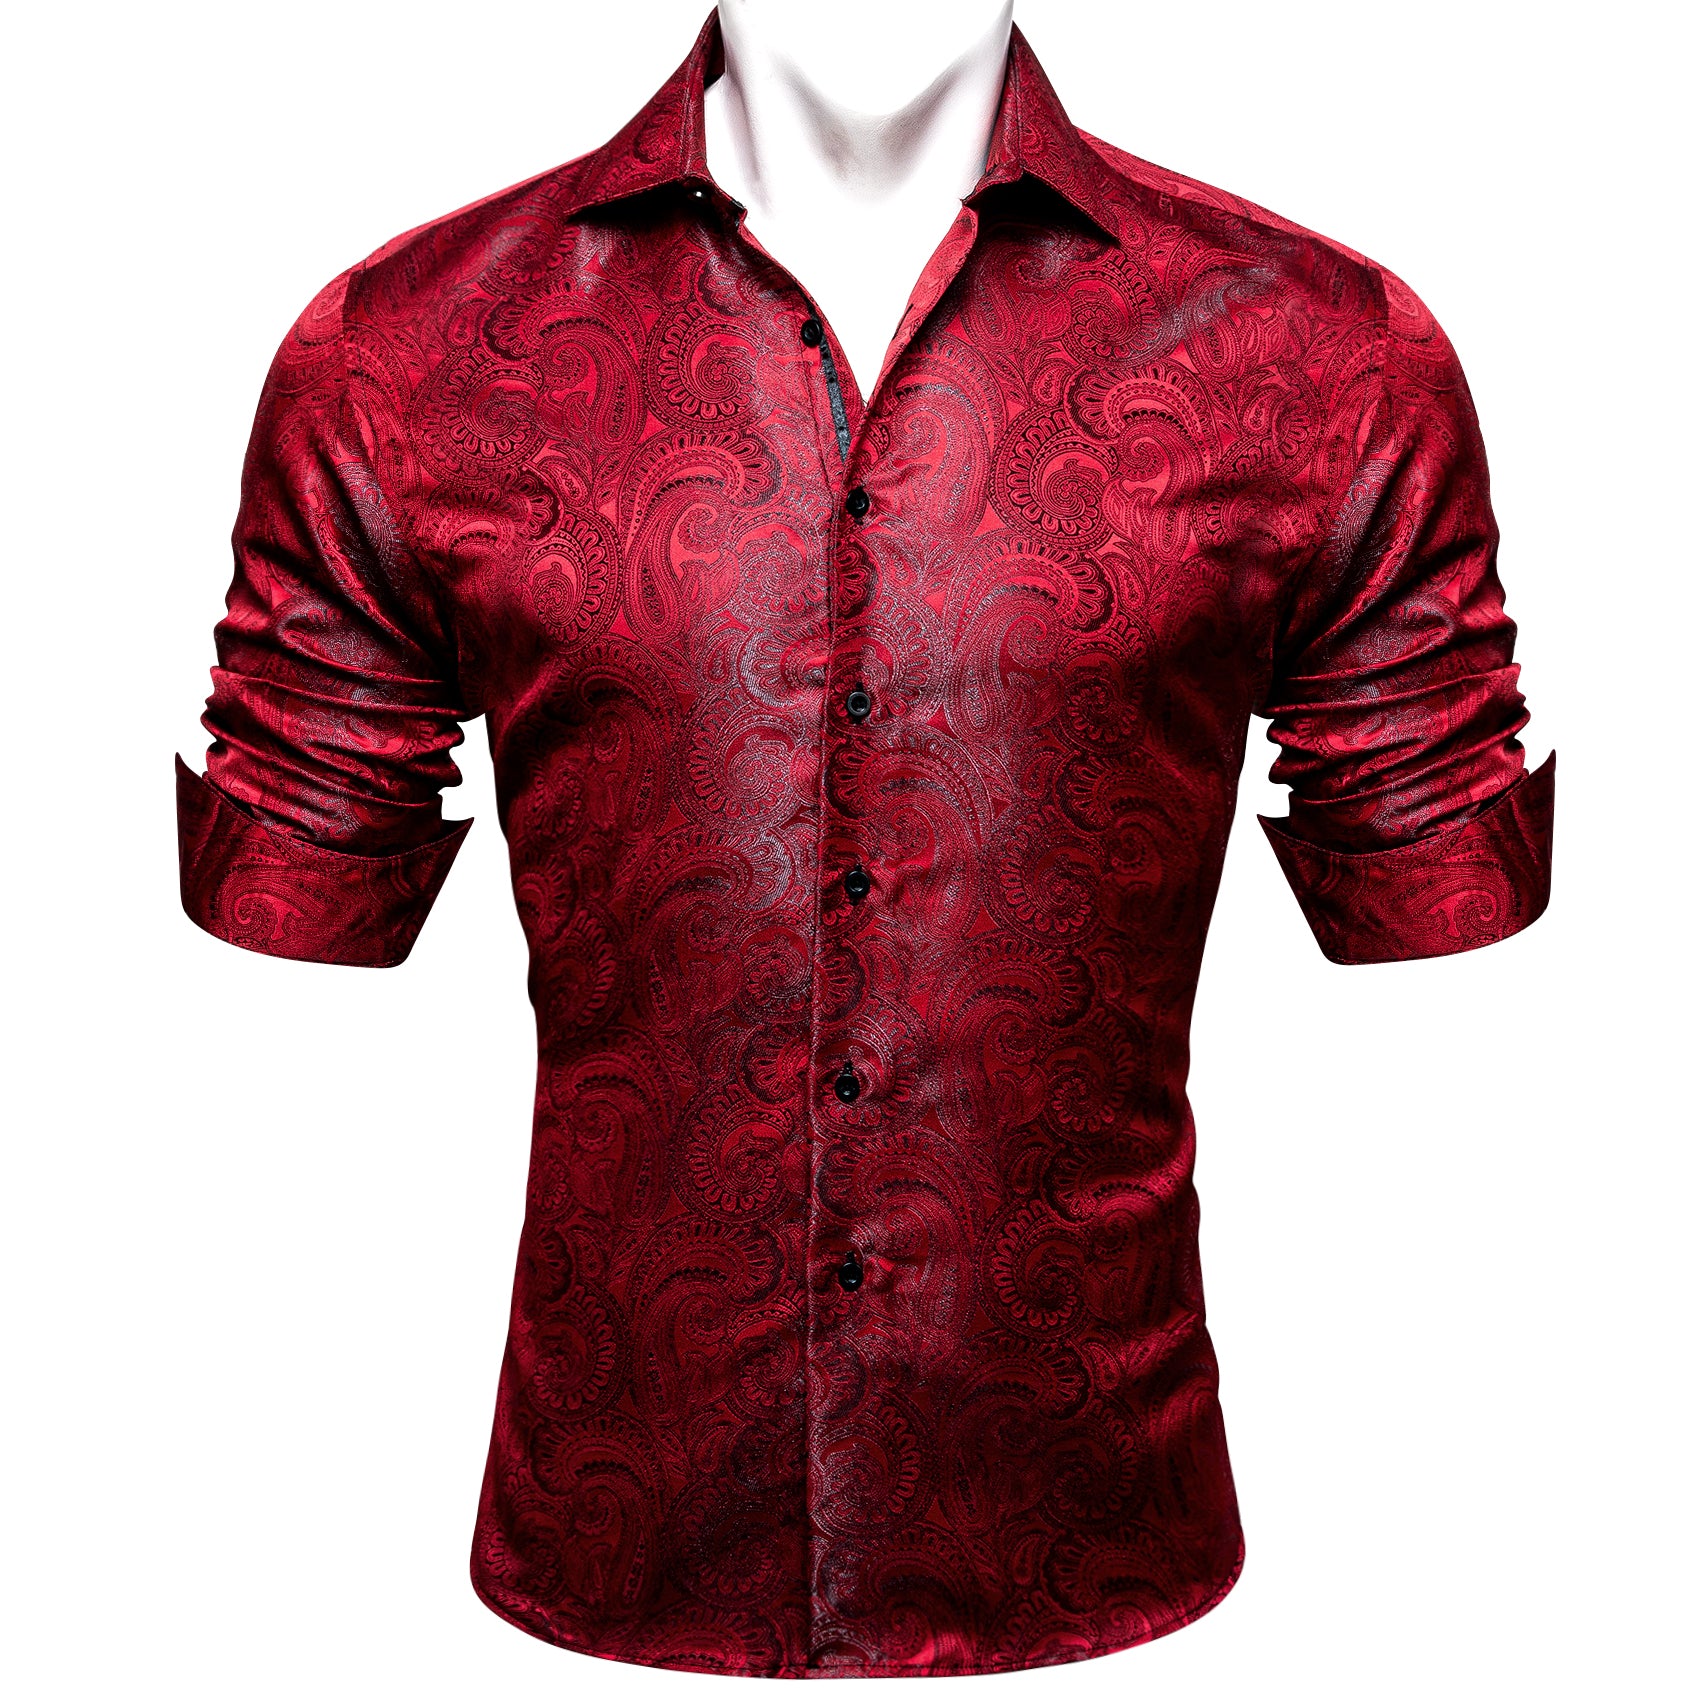 Barry.wang Dull Red Paisley Silk Men's Shirt